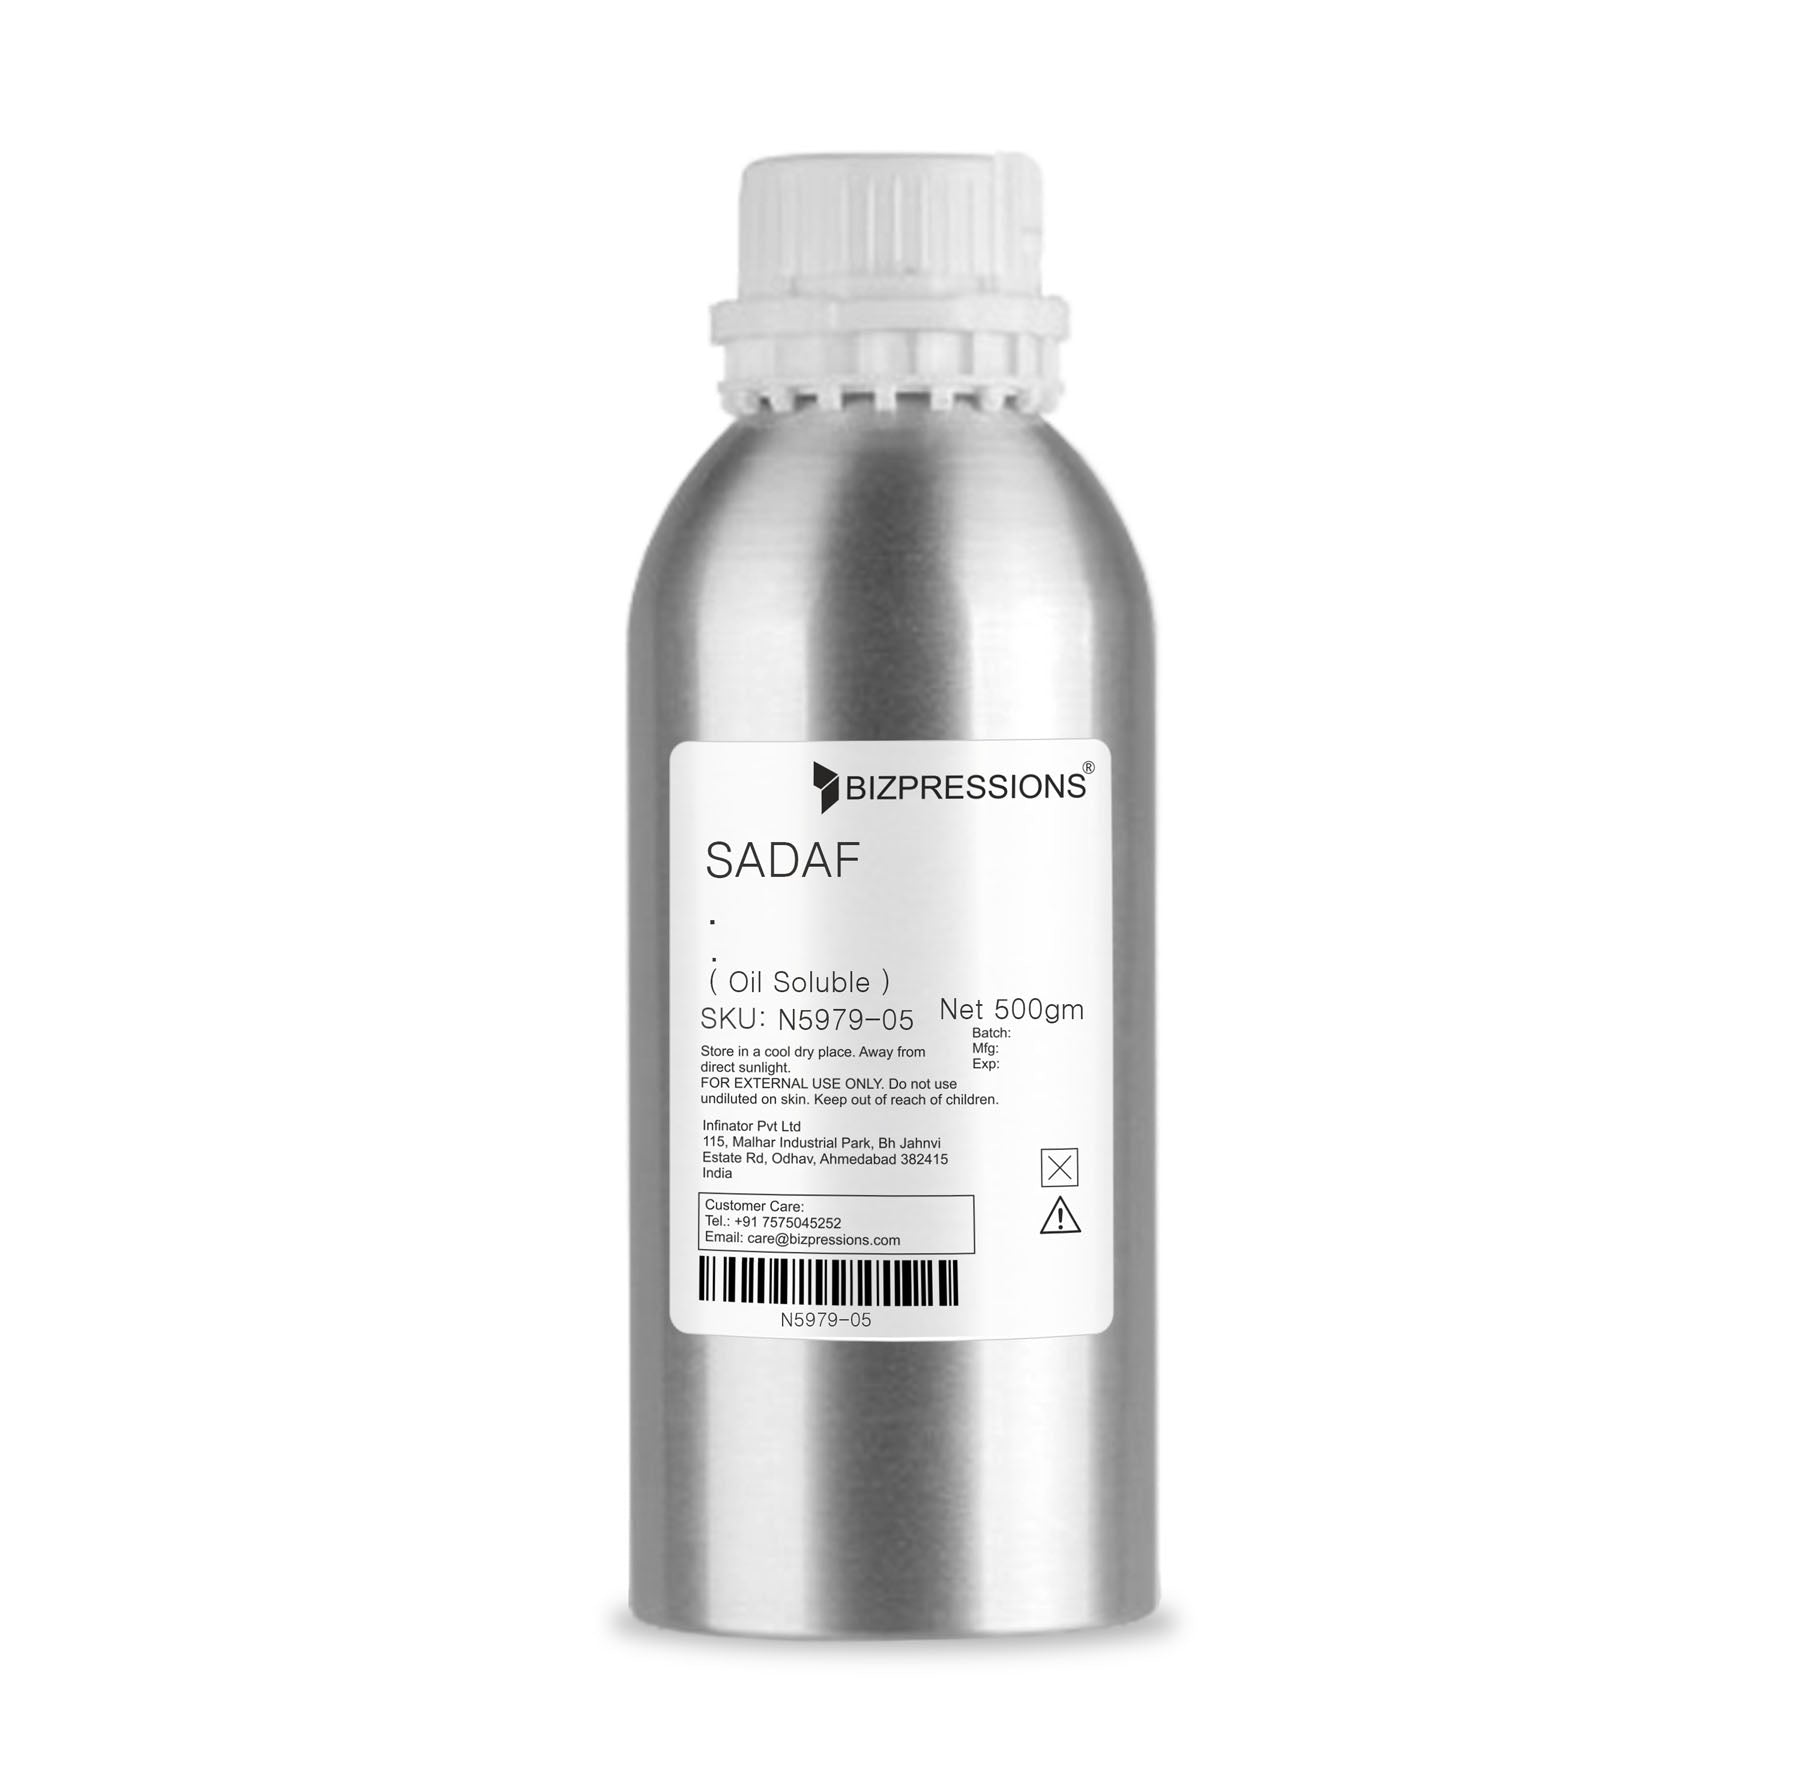 SADAF - Fragrance ( Oil Soluble ) - 500 gm